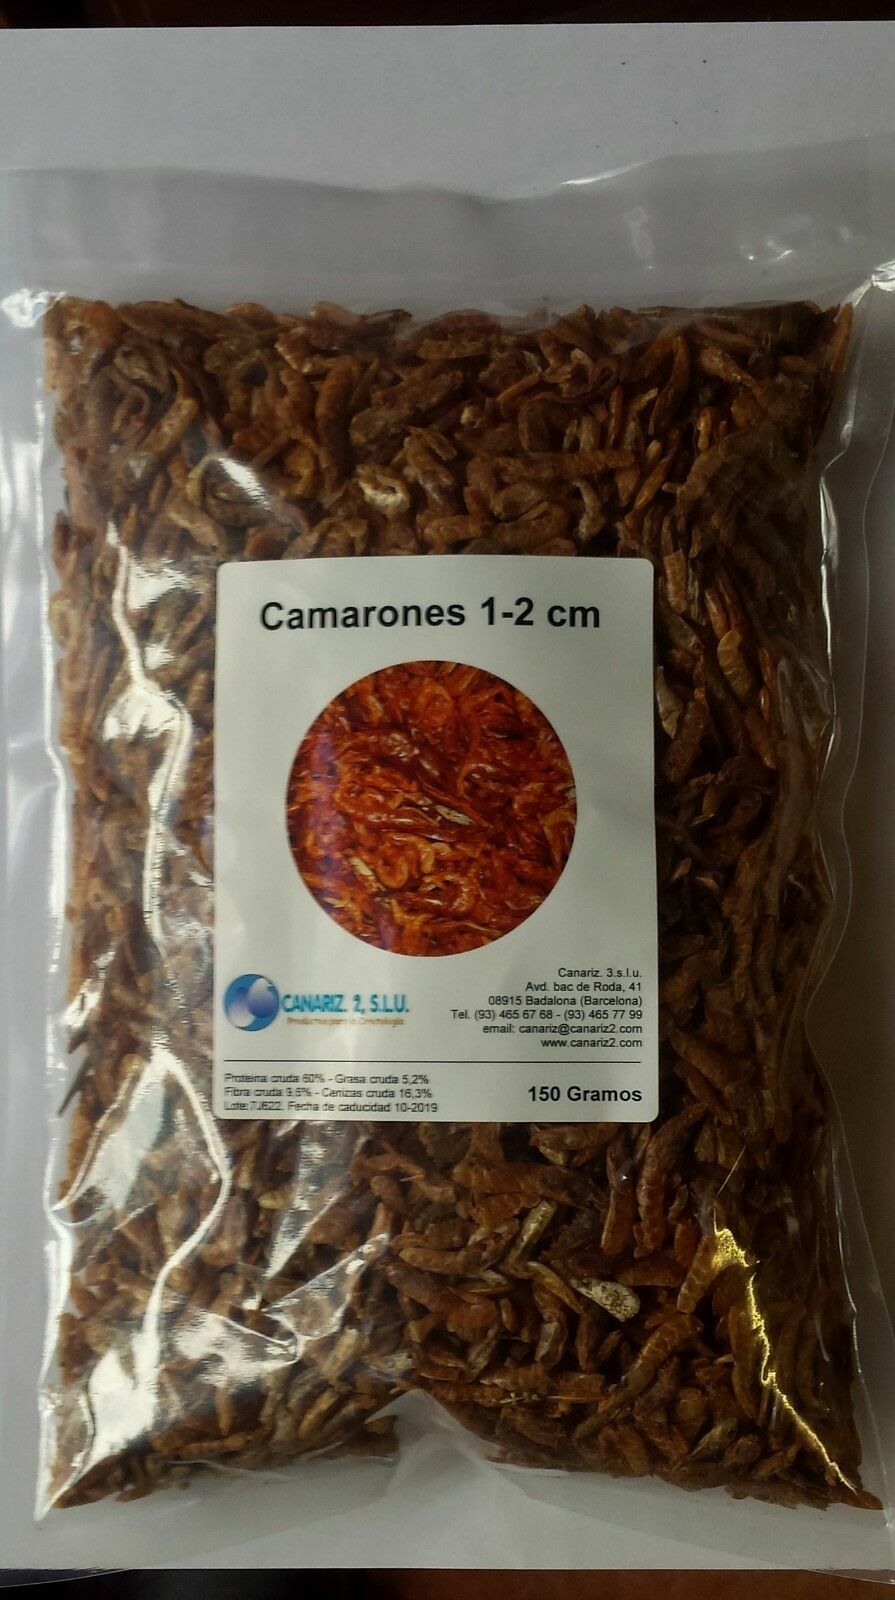 Camarones 1-2 cm